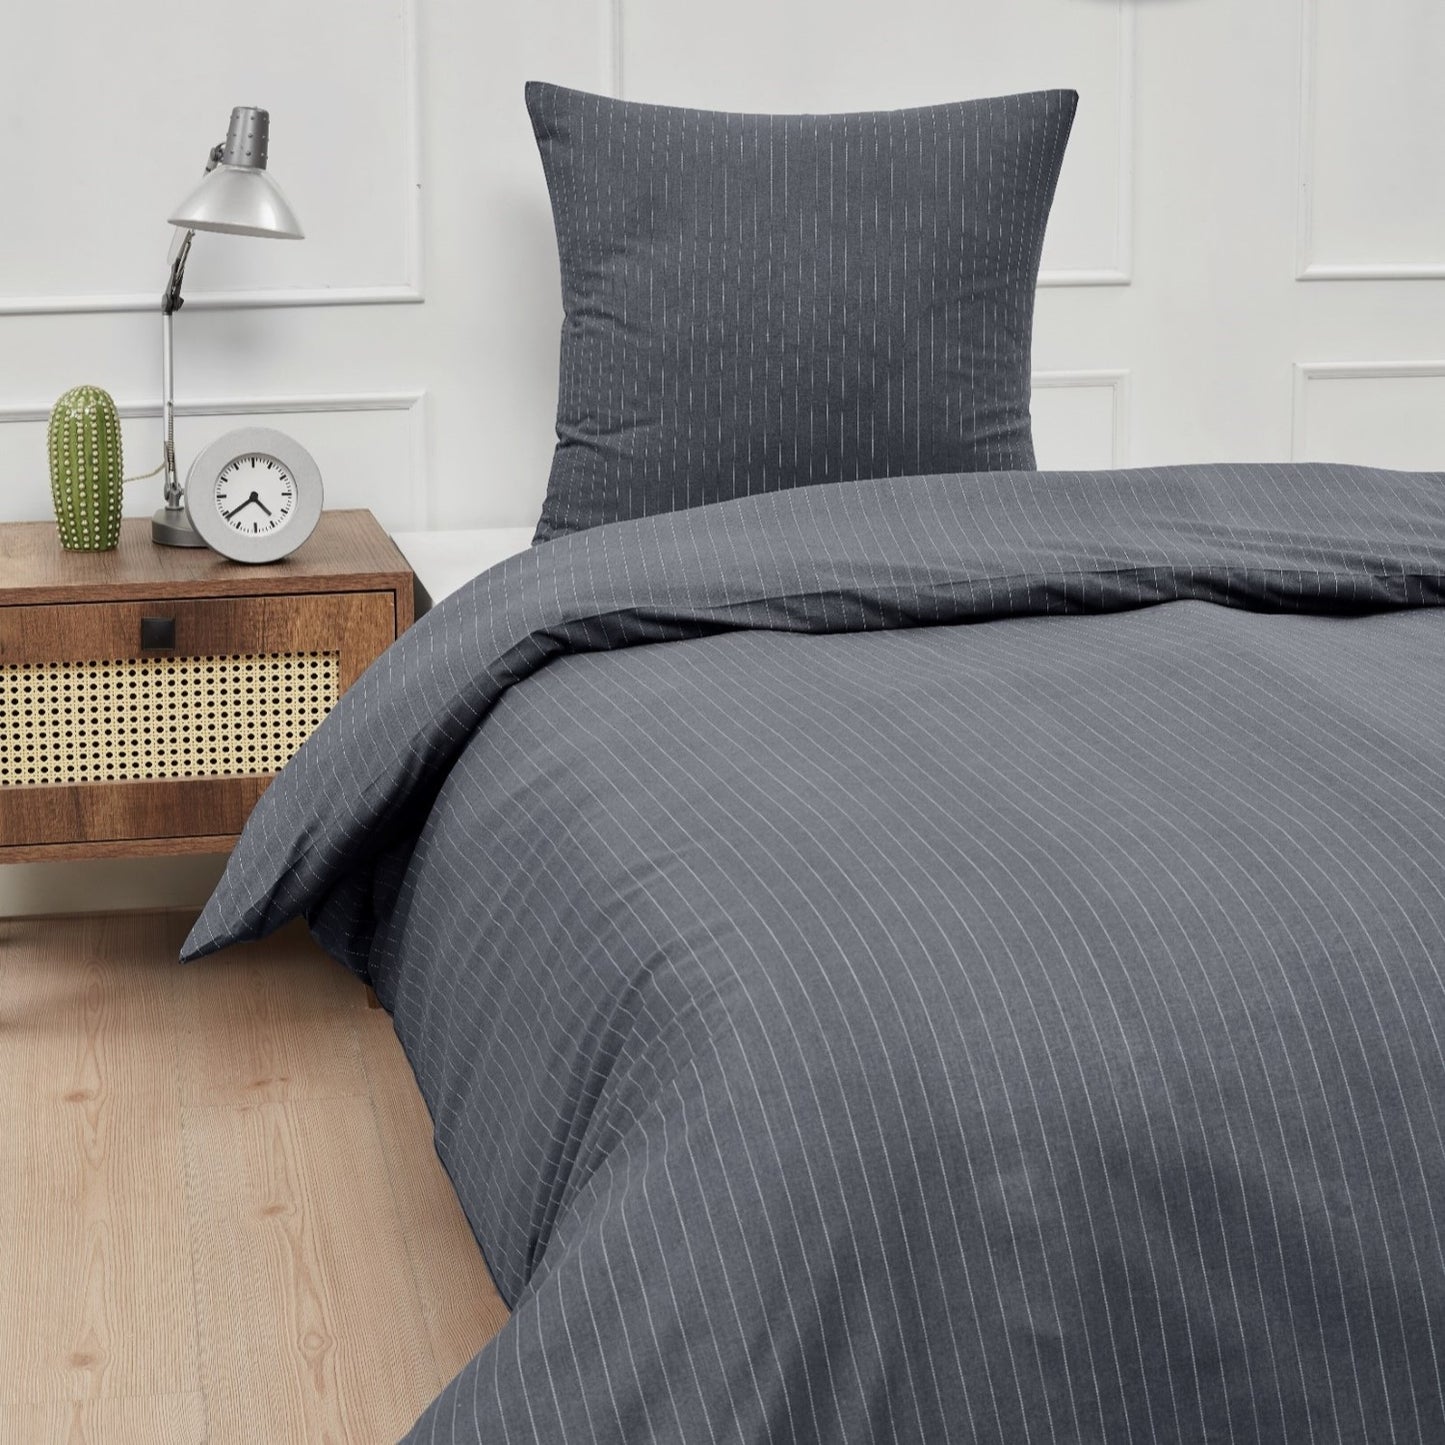 By Skagen sengesæt - Carina, grå med smalle striber 140x200 cm